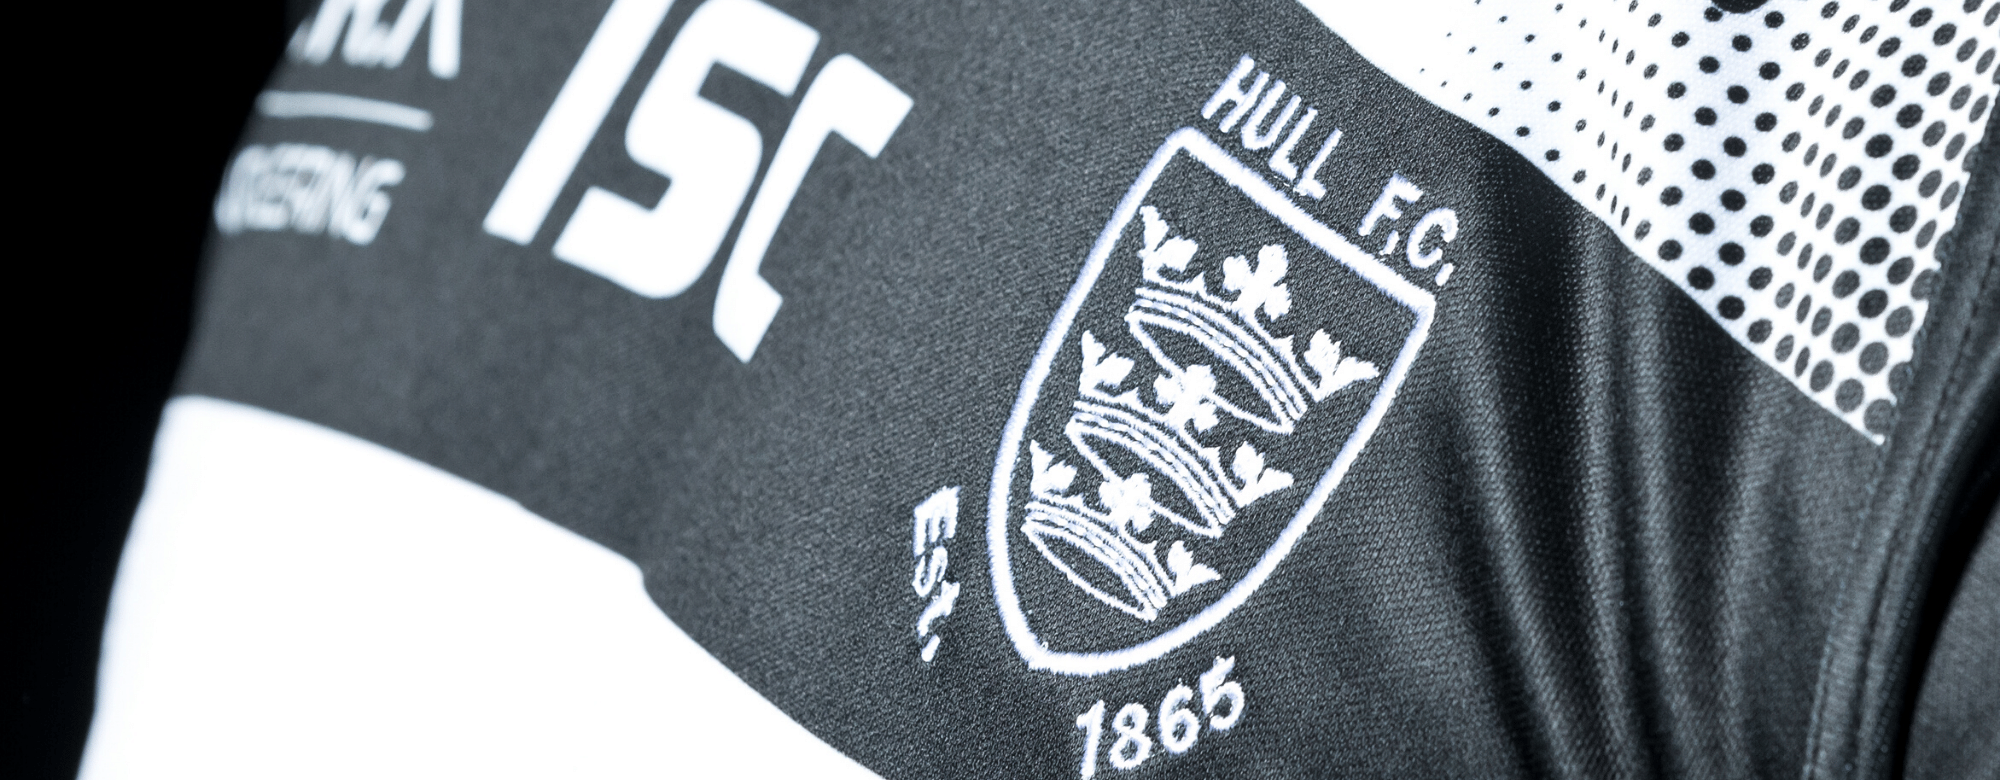 Big Savings On 2020 Jerseys - Hull FC News